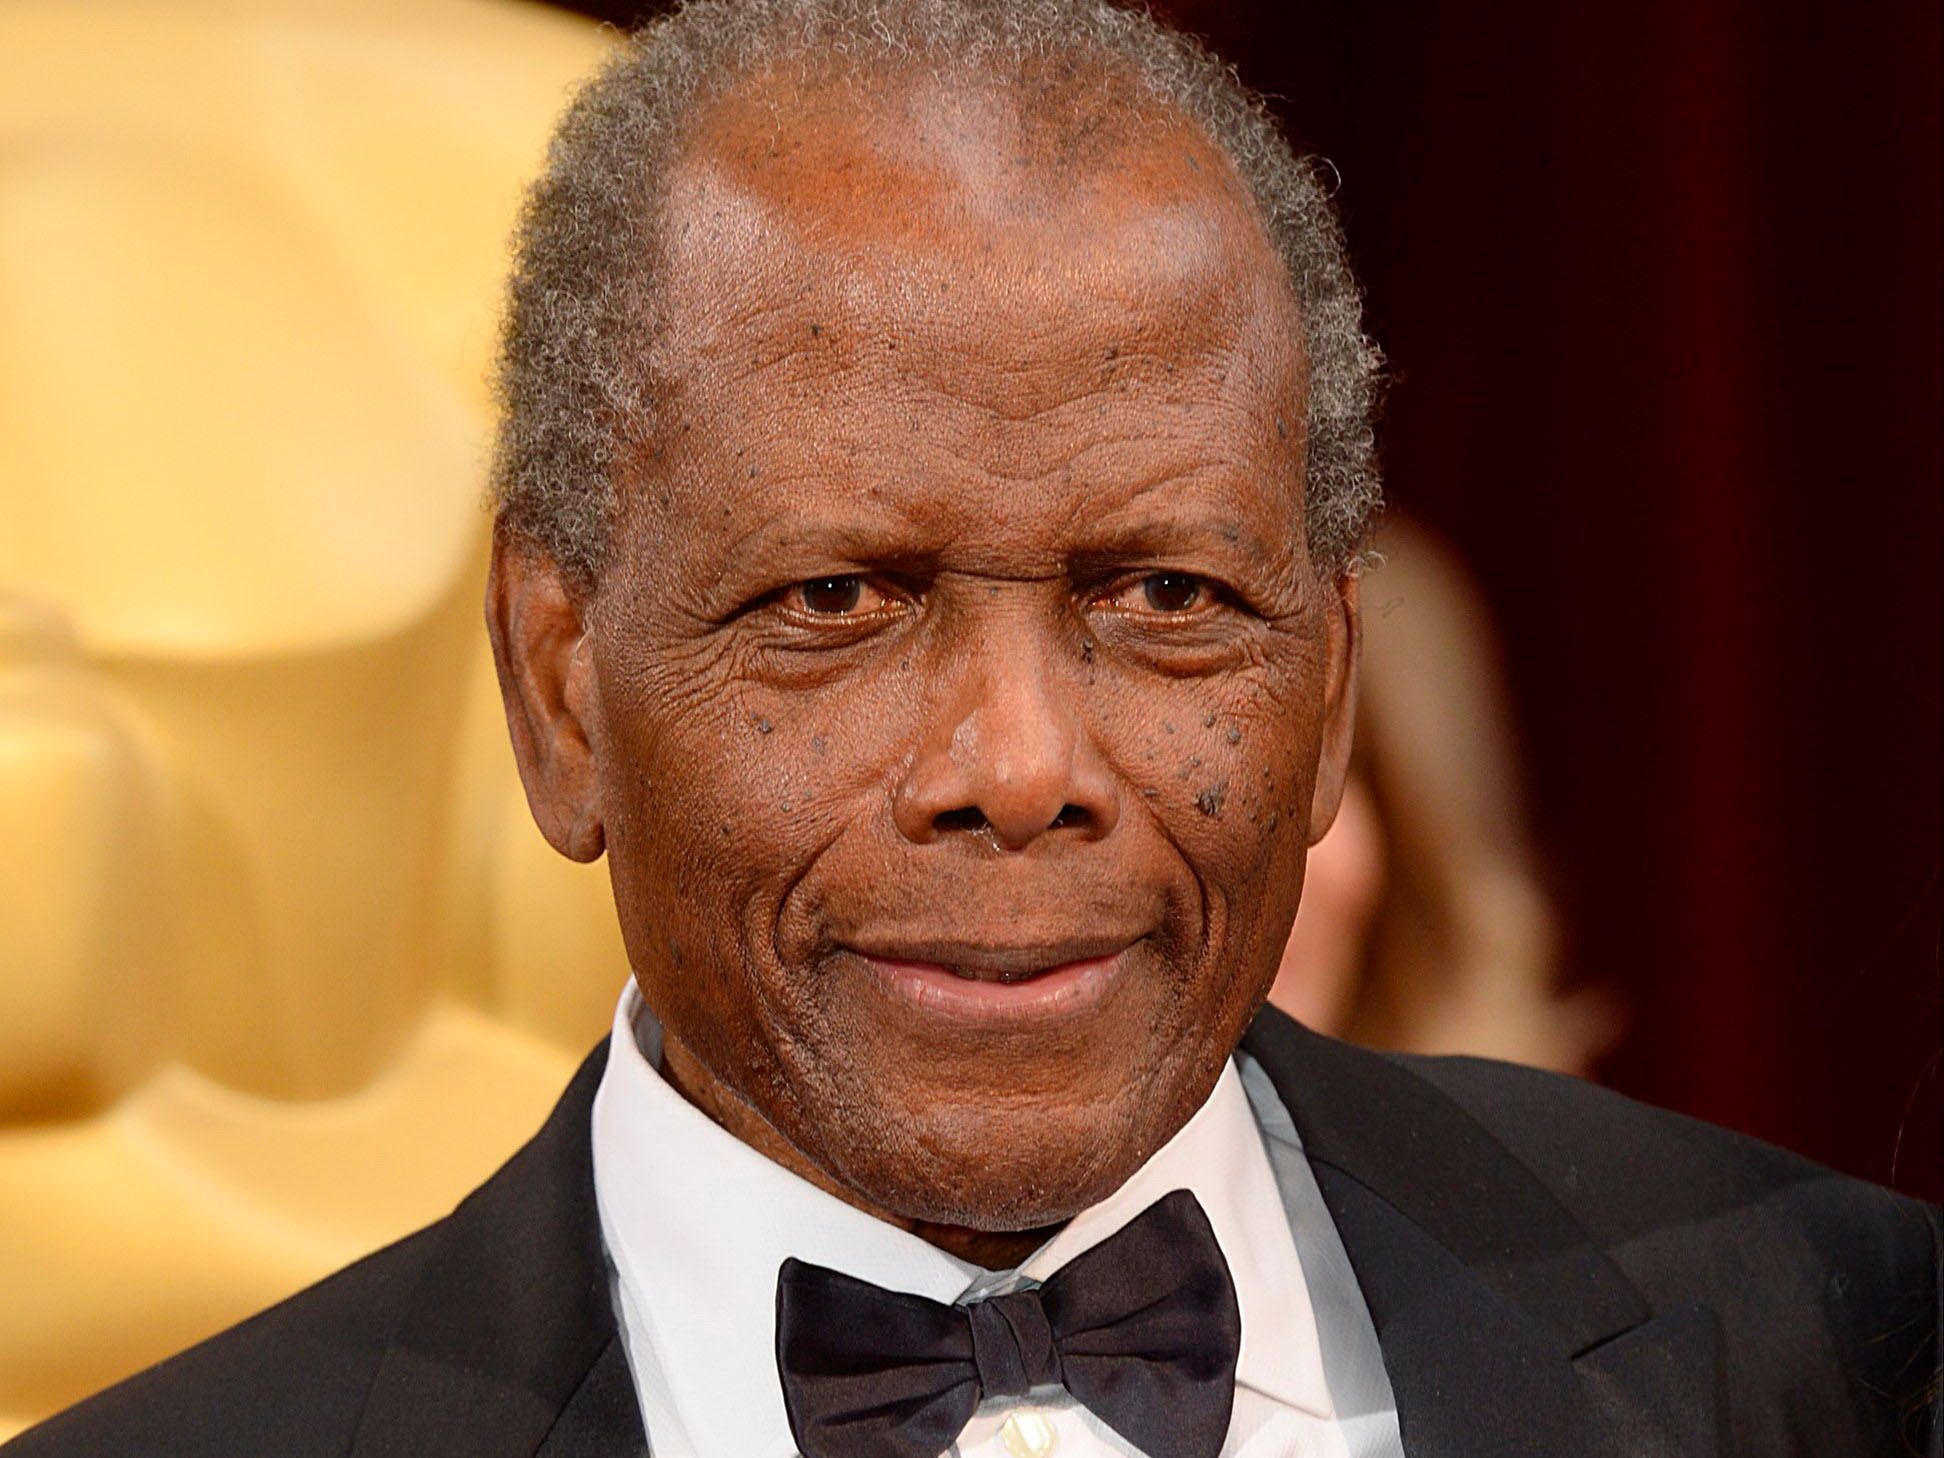 Der Schauspieler war der erste Afroamerikaner, der den Oscar erhielt.